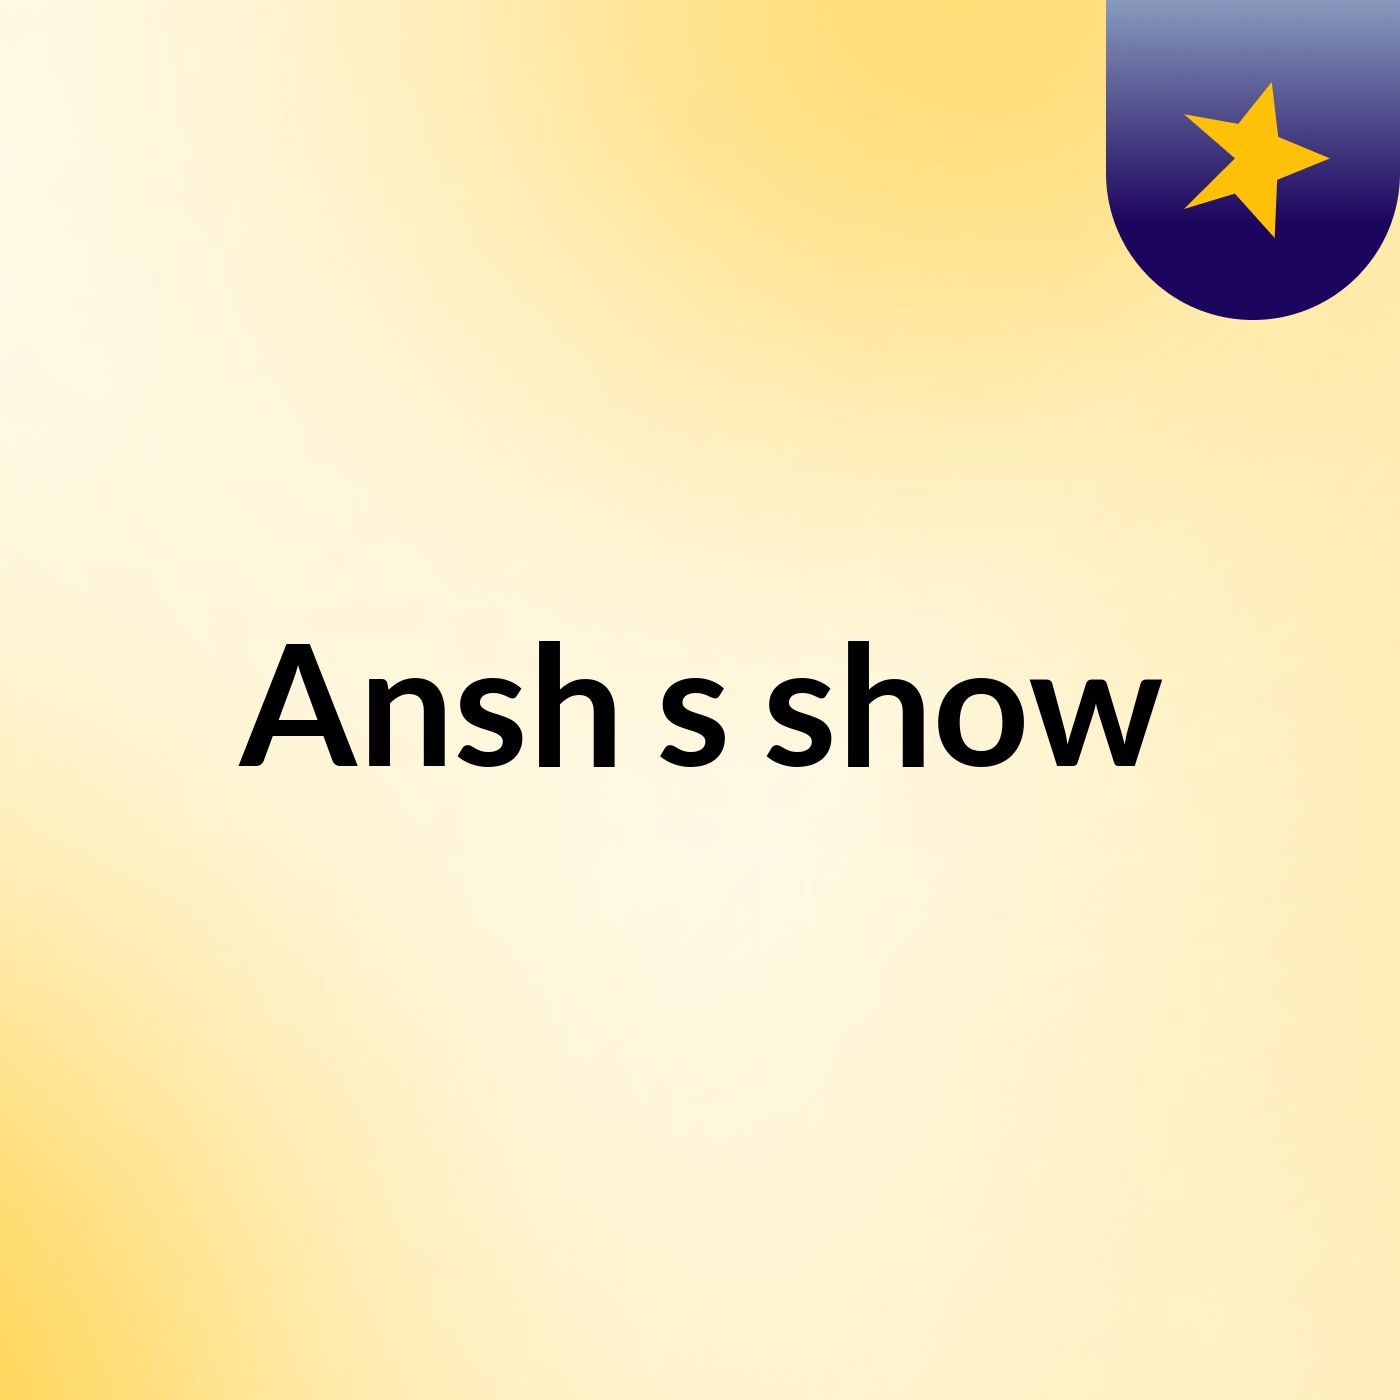 Ansh's show